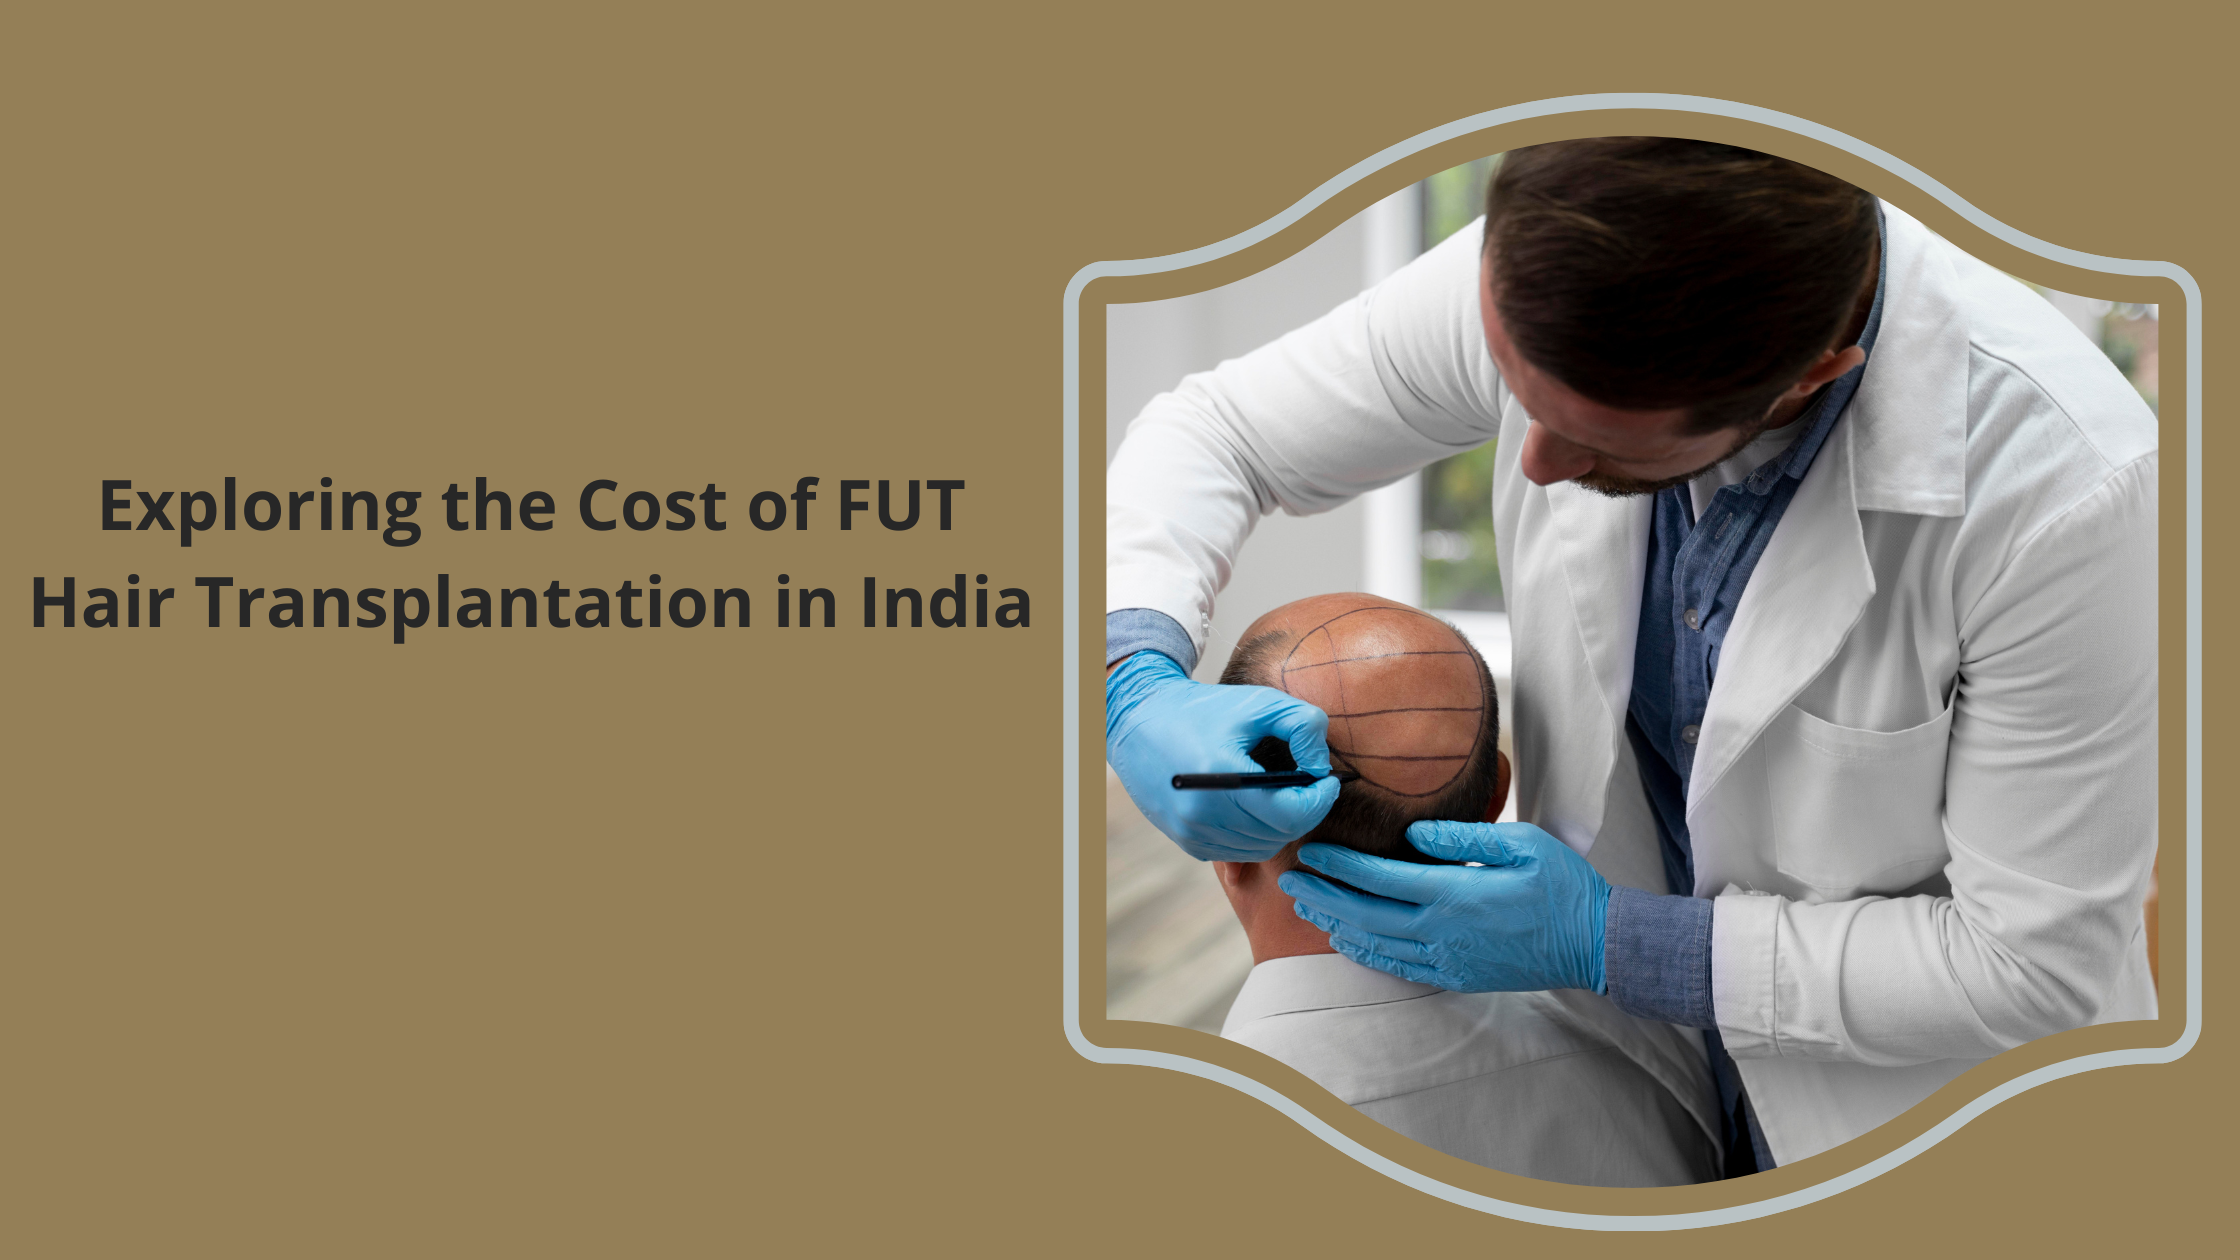 FUT hair transplantation in India